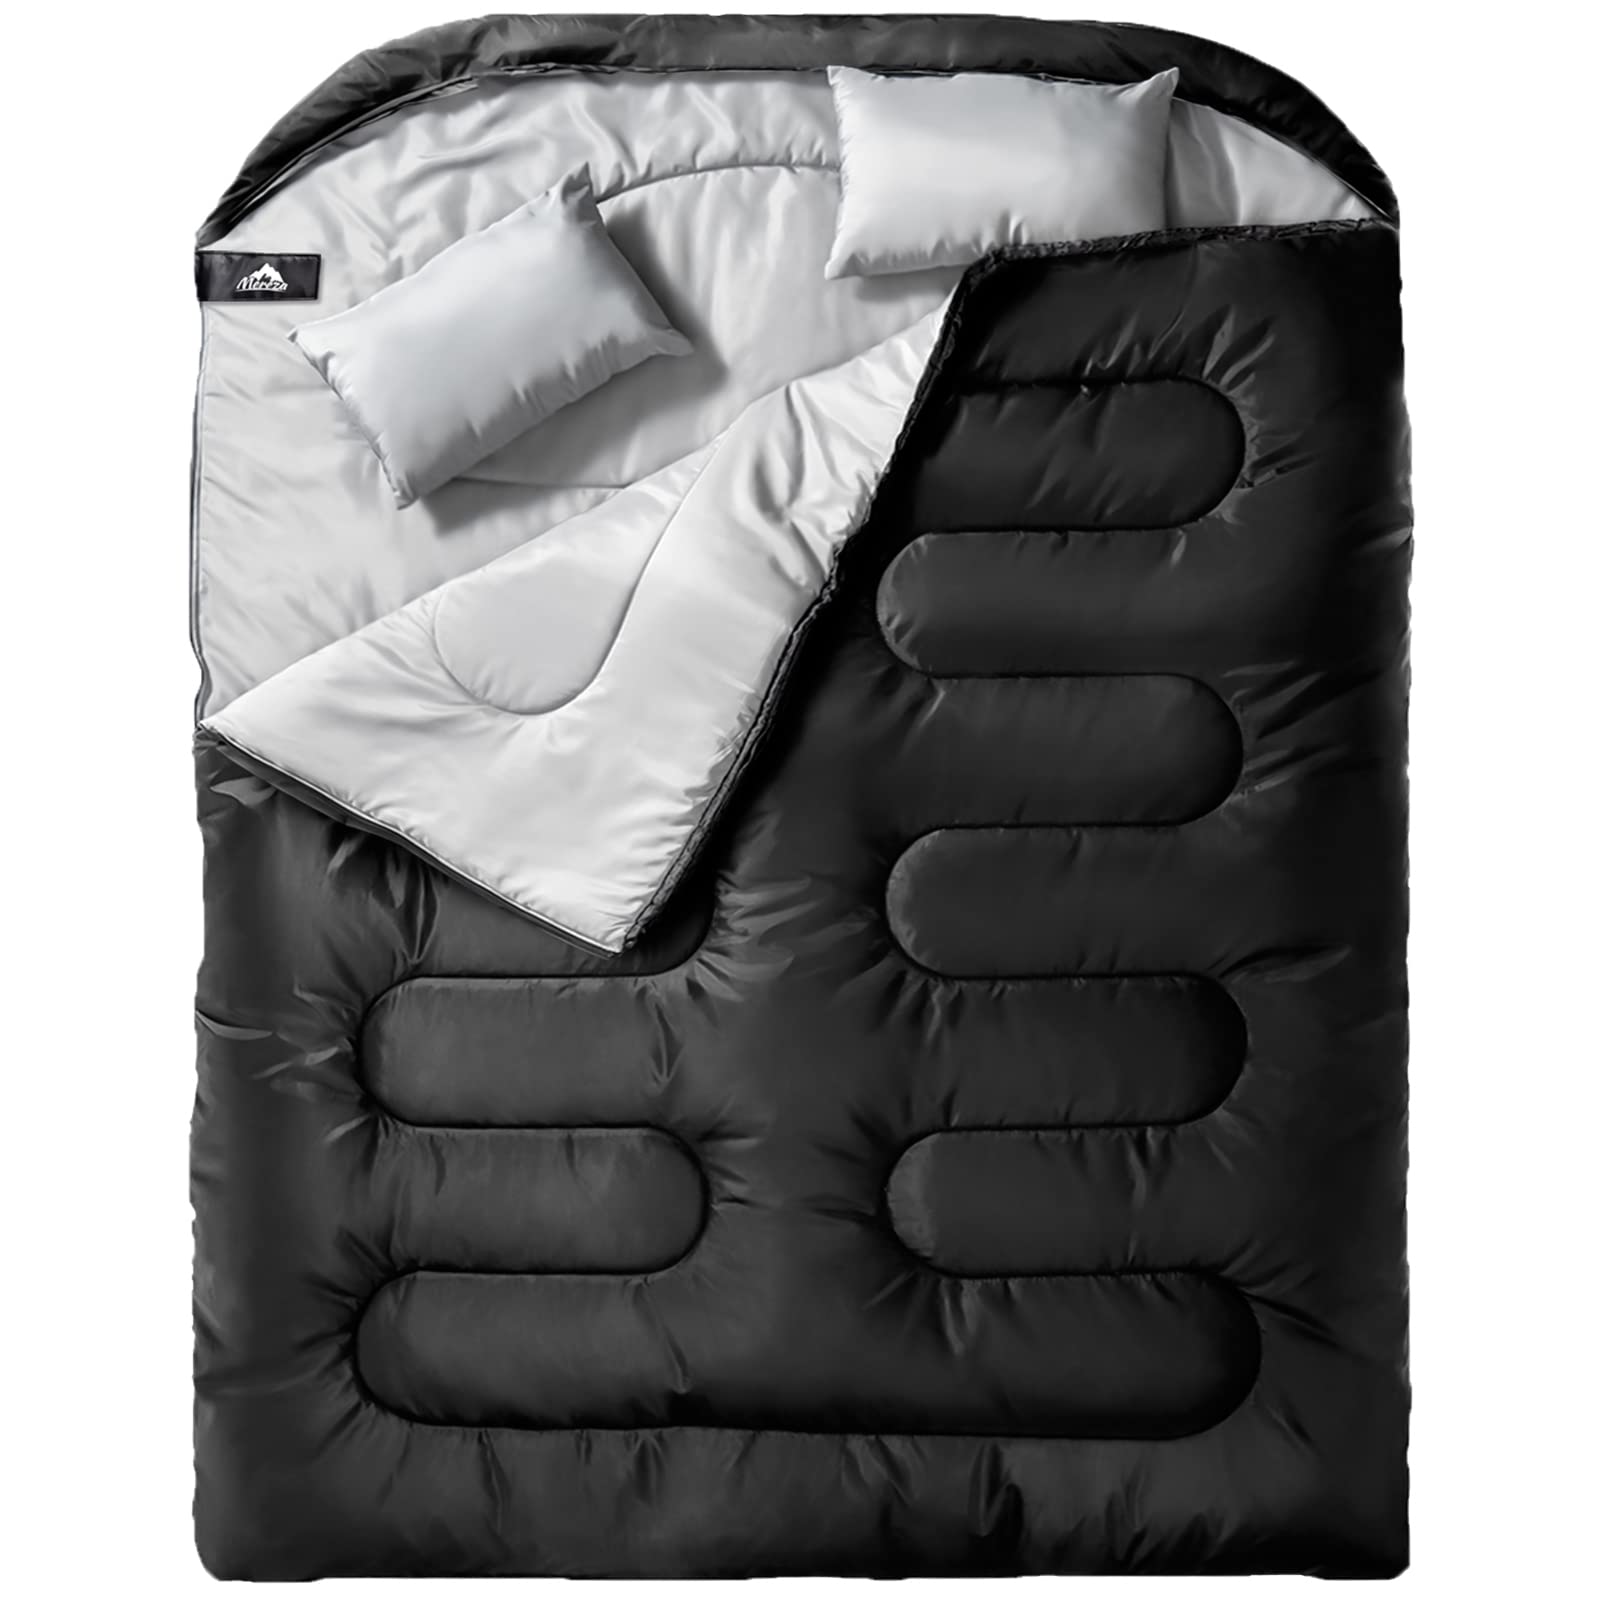 Lightweight Waterproof Cold Weather Sleeping Bag for Girls, Boys